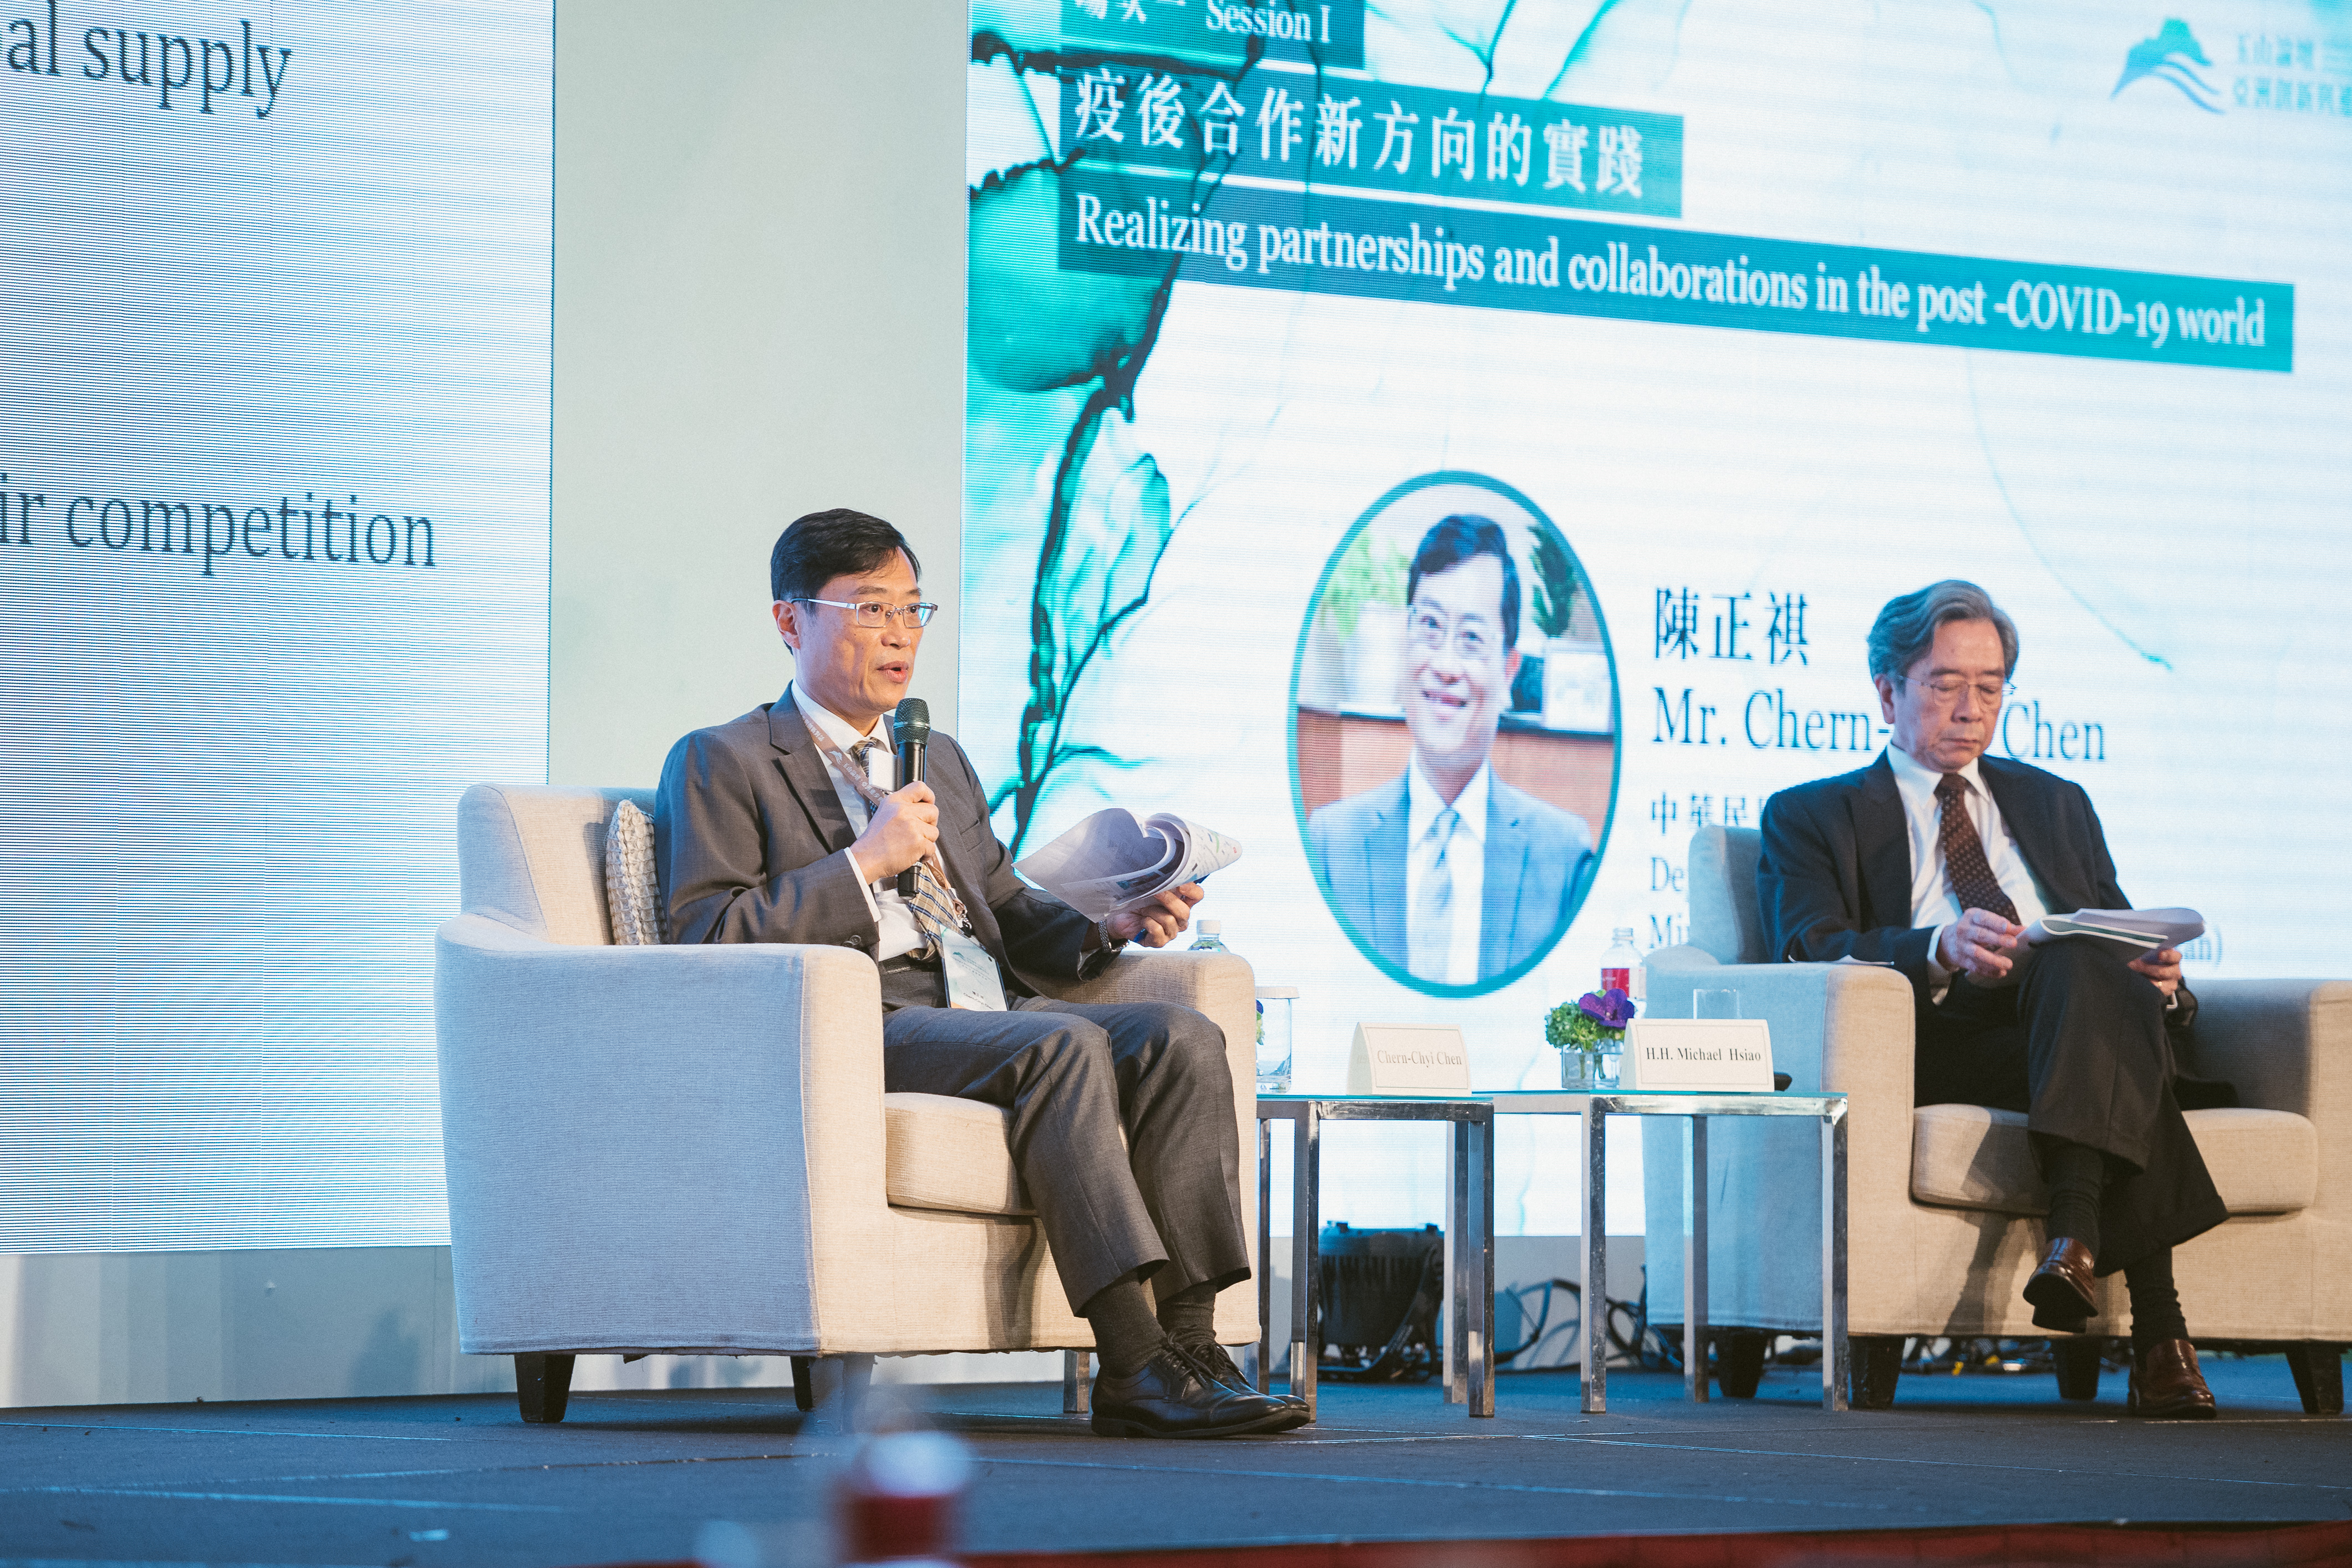 Chern-Chyi Chen, Ministry of Economic Affairs, R.O.C (Taiwan), as panelist